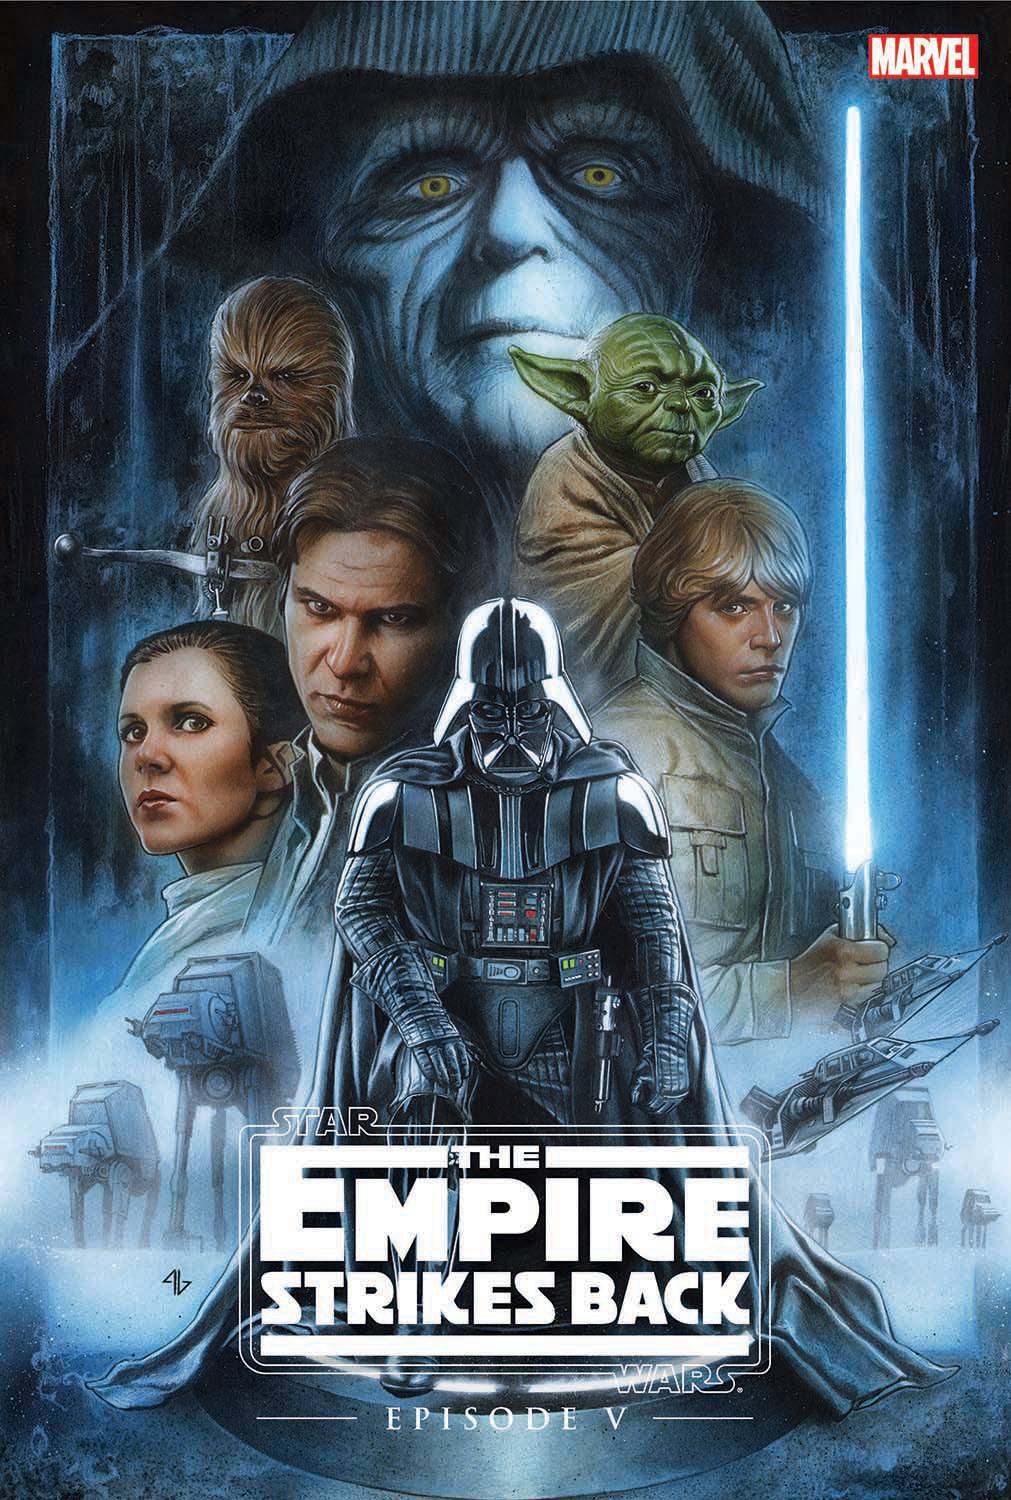 Star Wars Episode V: The Empire Strikes Back wallpaper, Movie, HQ Star Wars Episode V: The Empire Strikes Back pictureK Wallpaper 2019